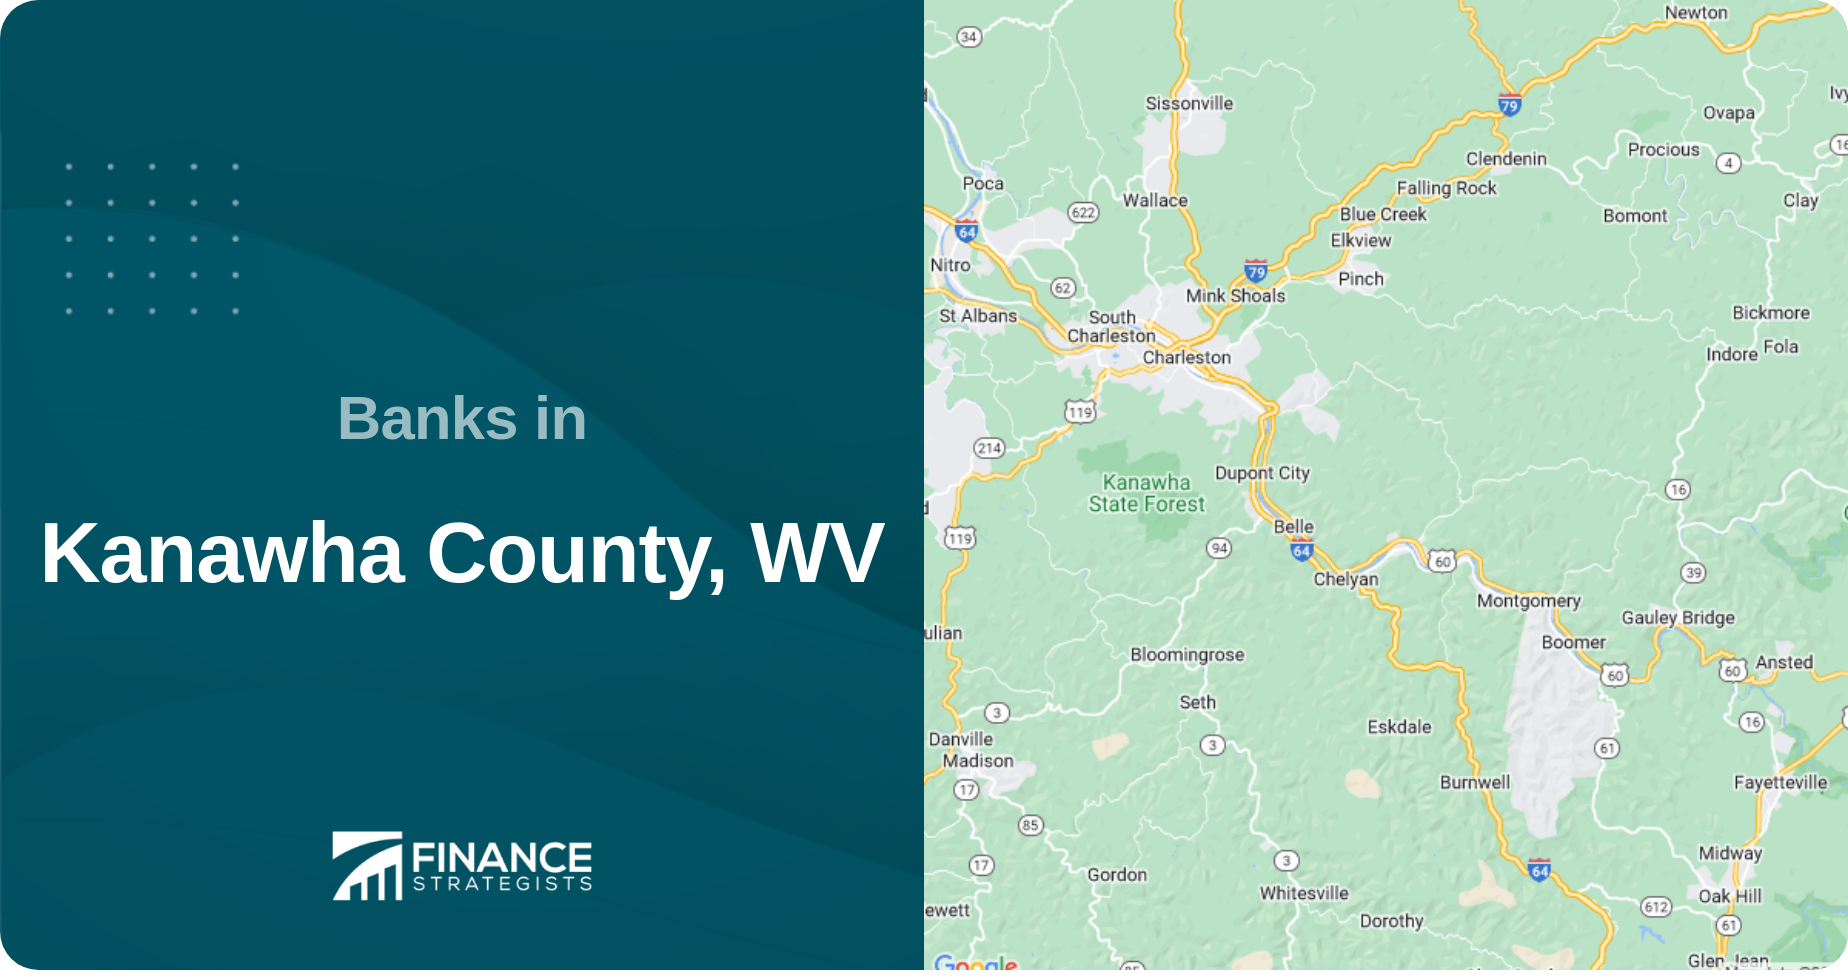 Banks in Kanawha County, WV